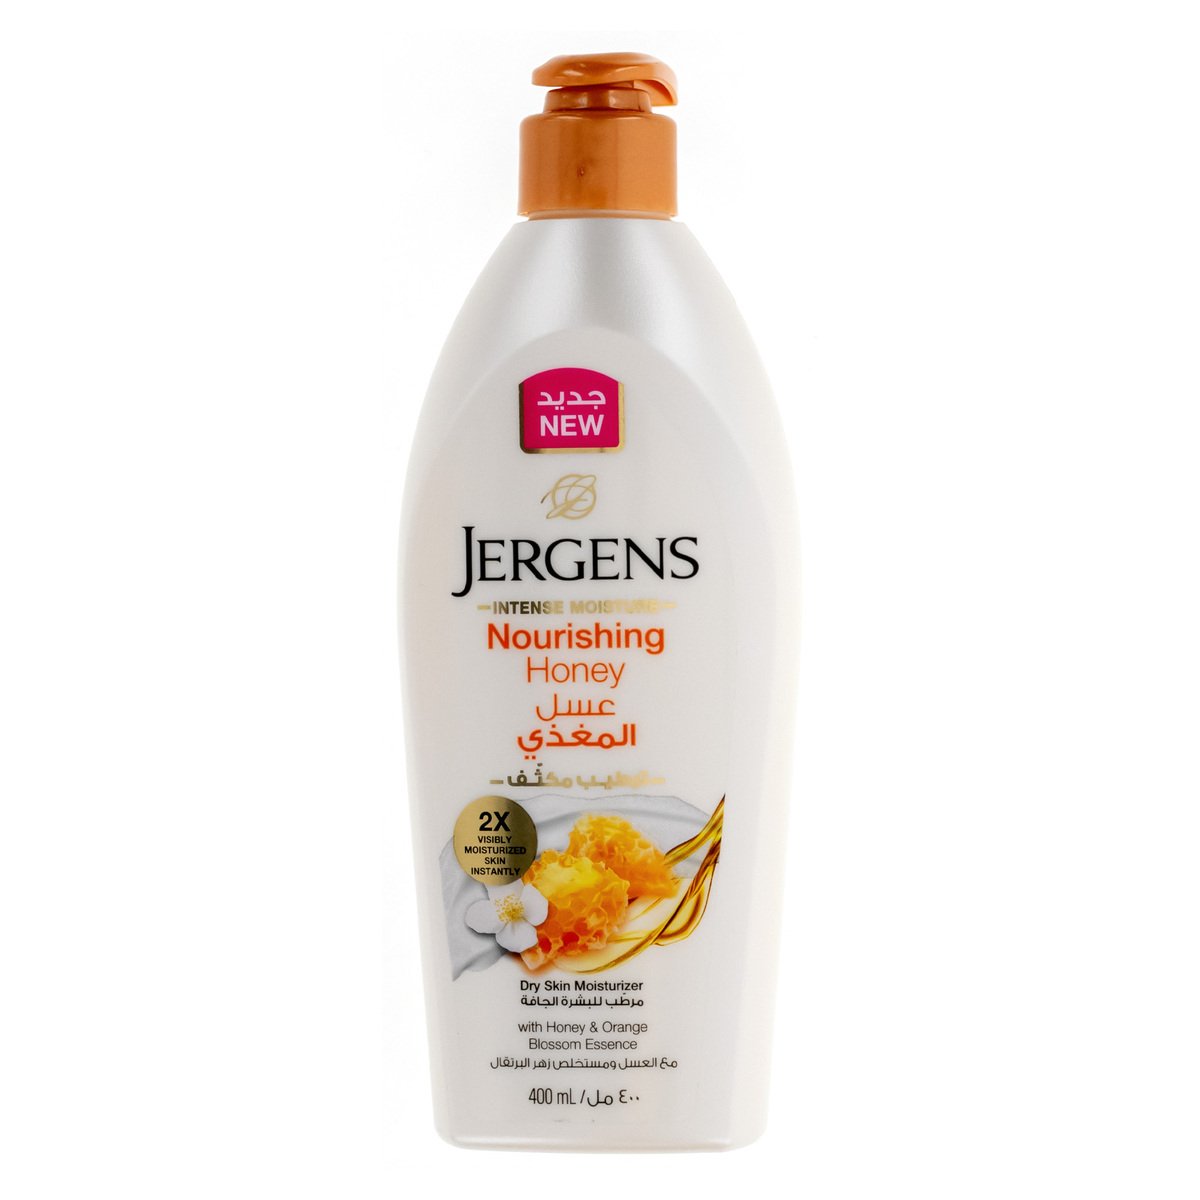 Jergens Intense Moisture Nourishing Honey Dry Skin Moisturizer 400 ml